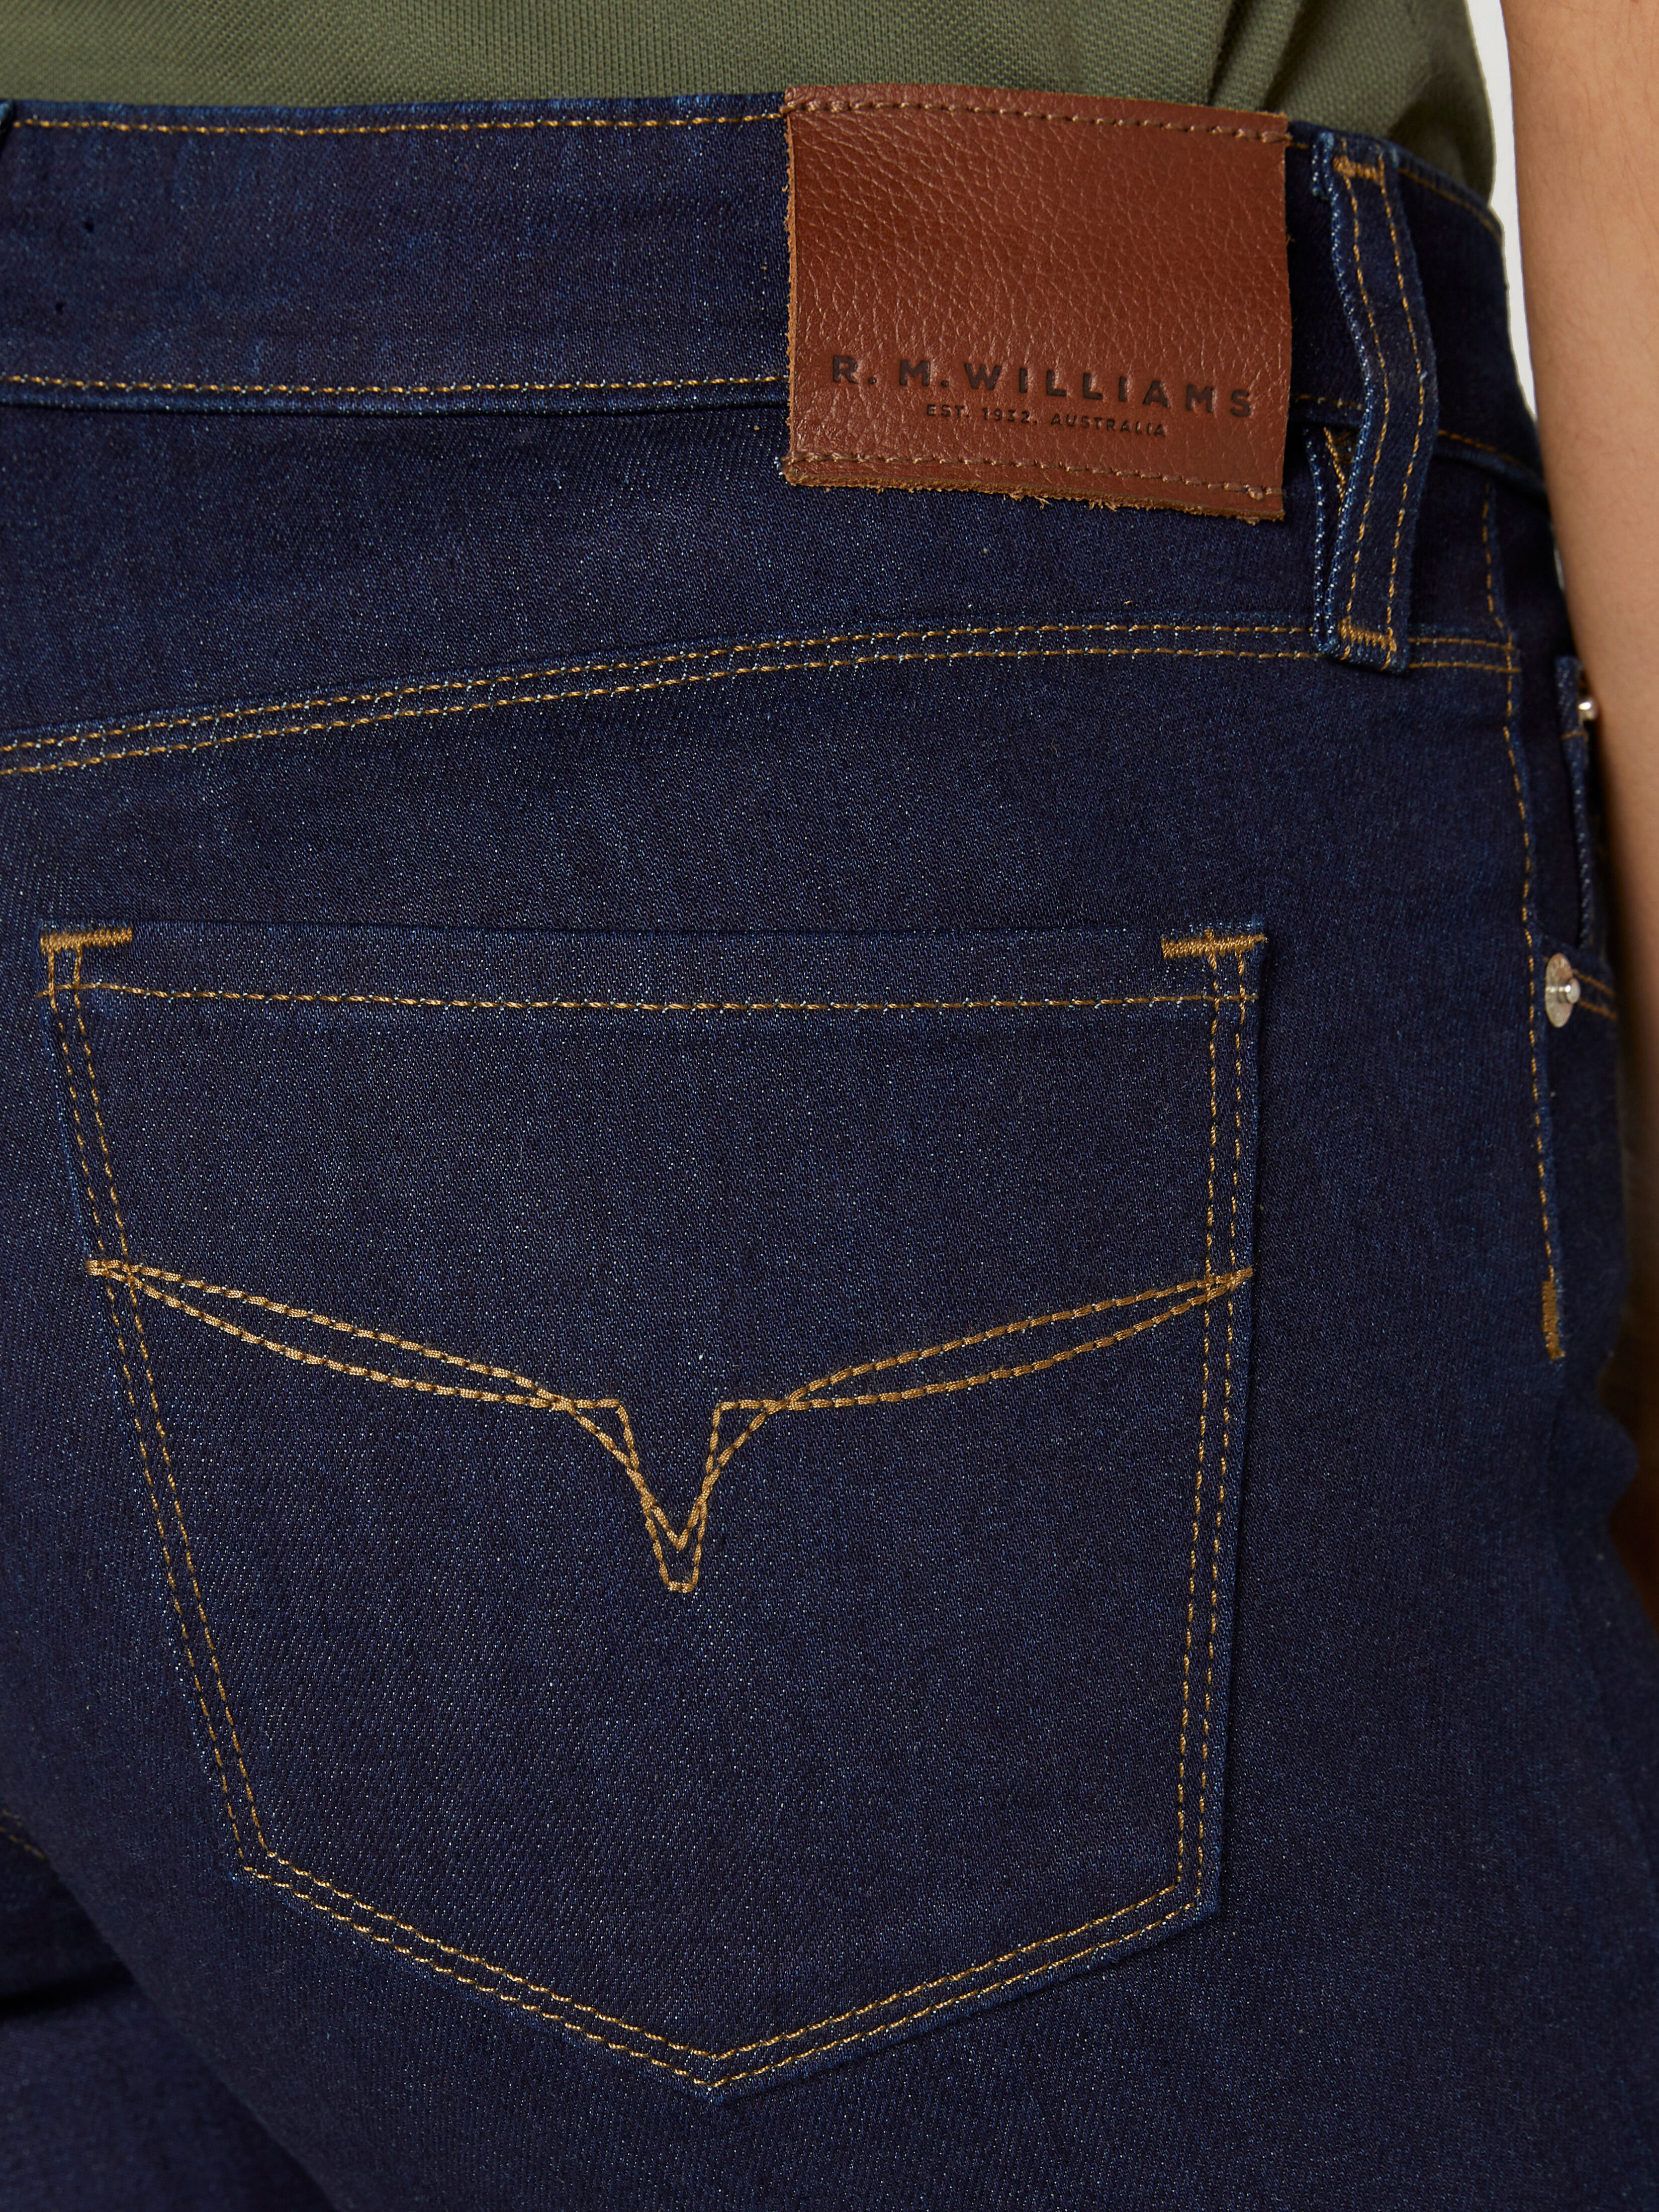 Tara Jeans - Women's Jeans at R.M.Williams®